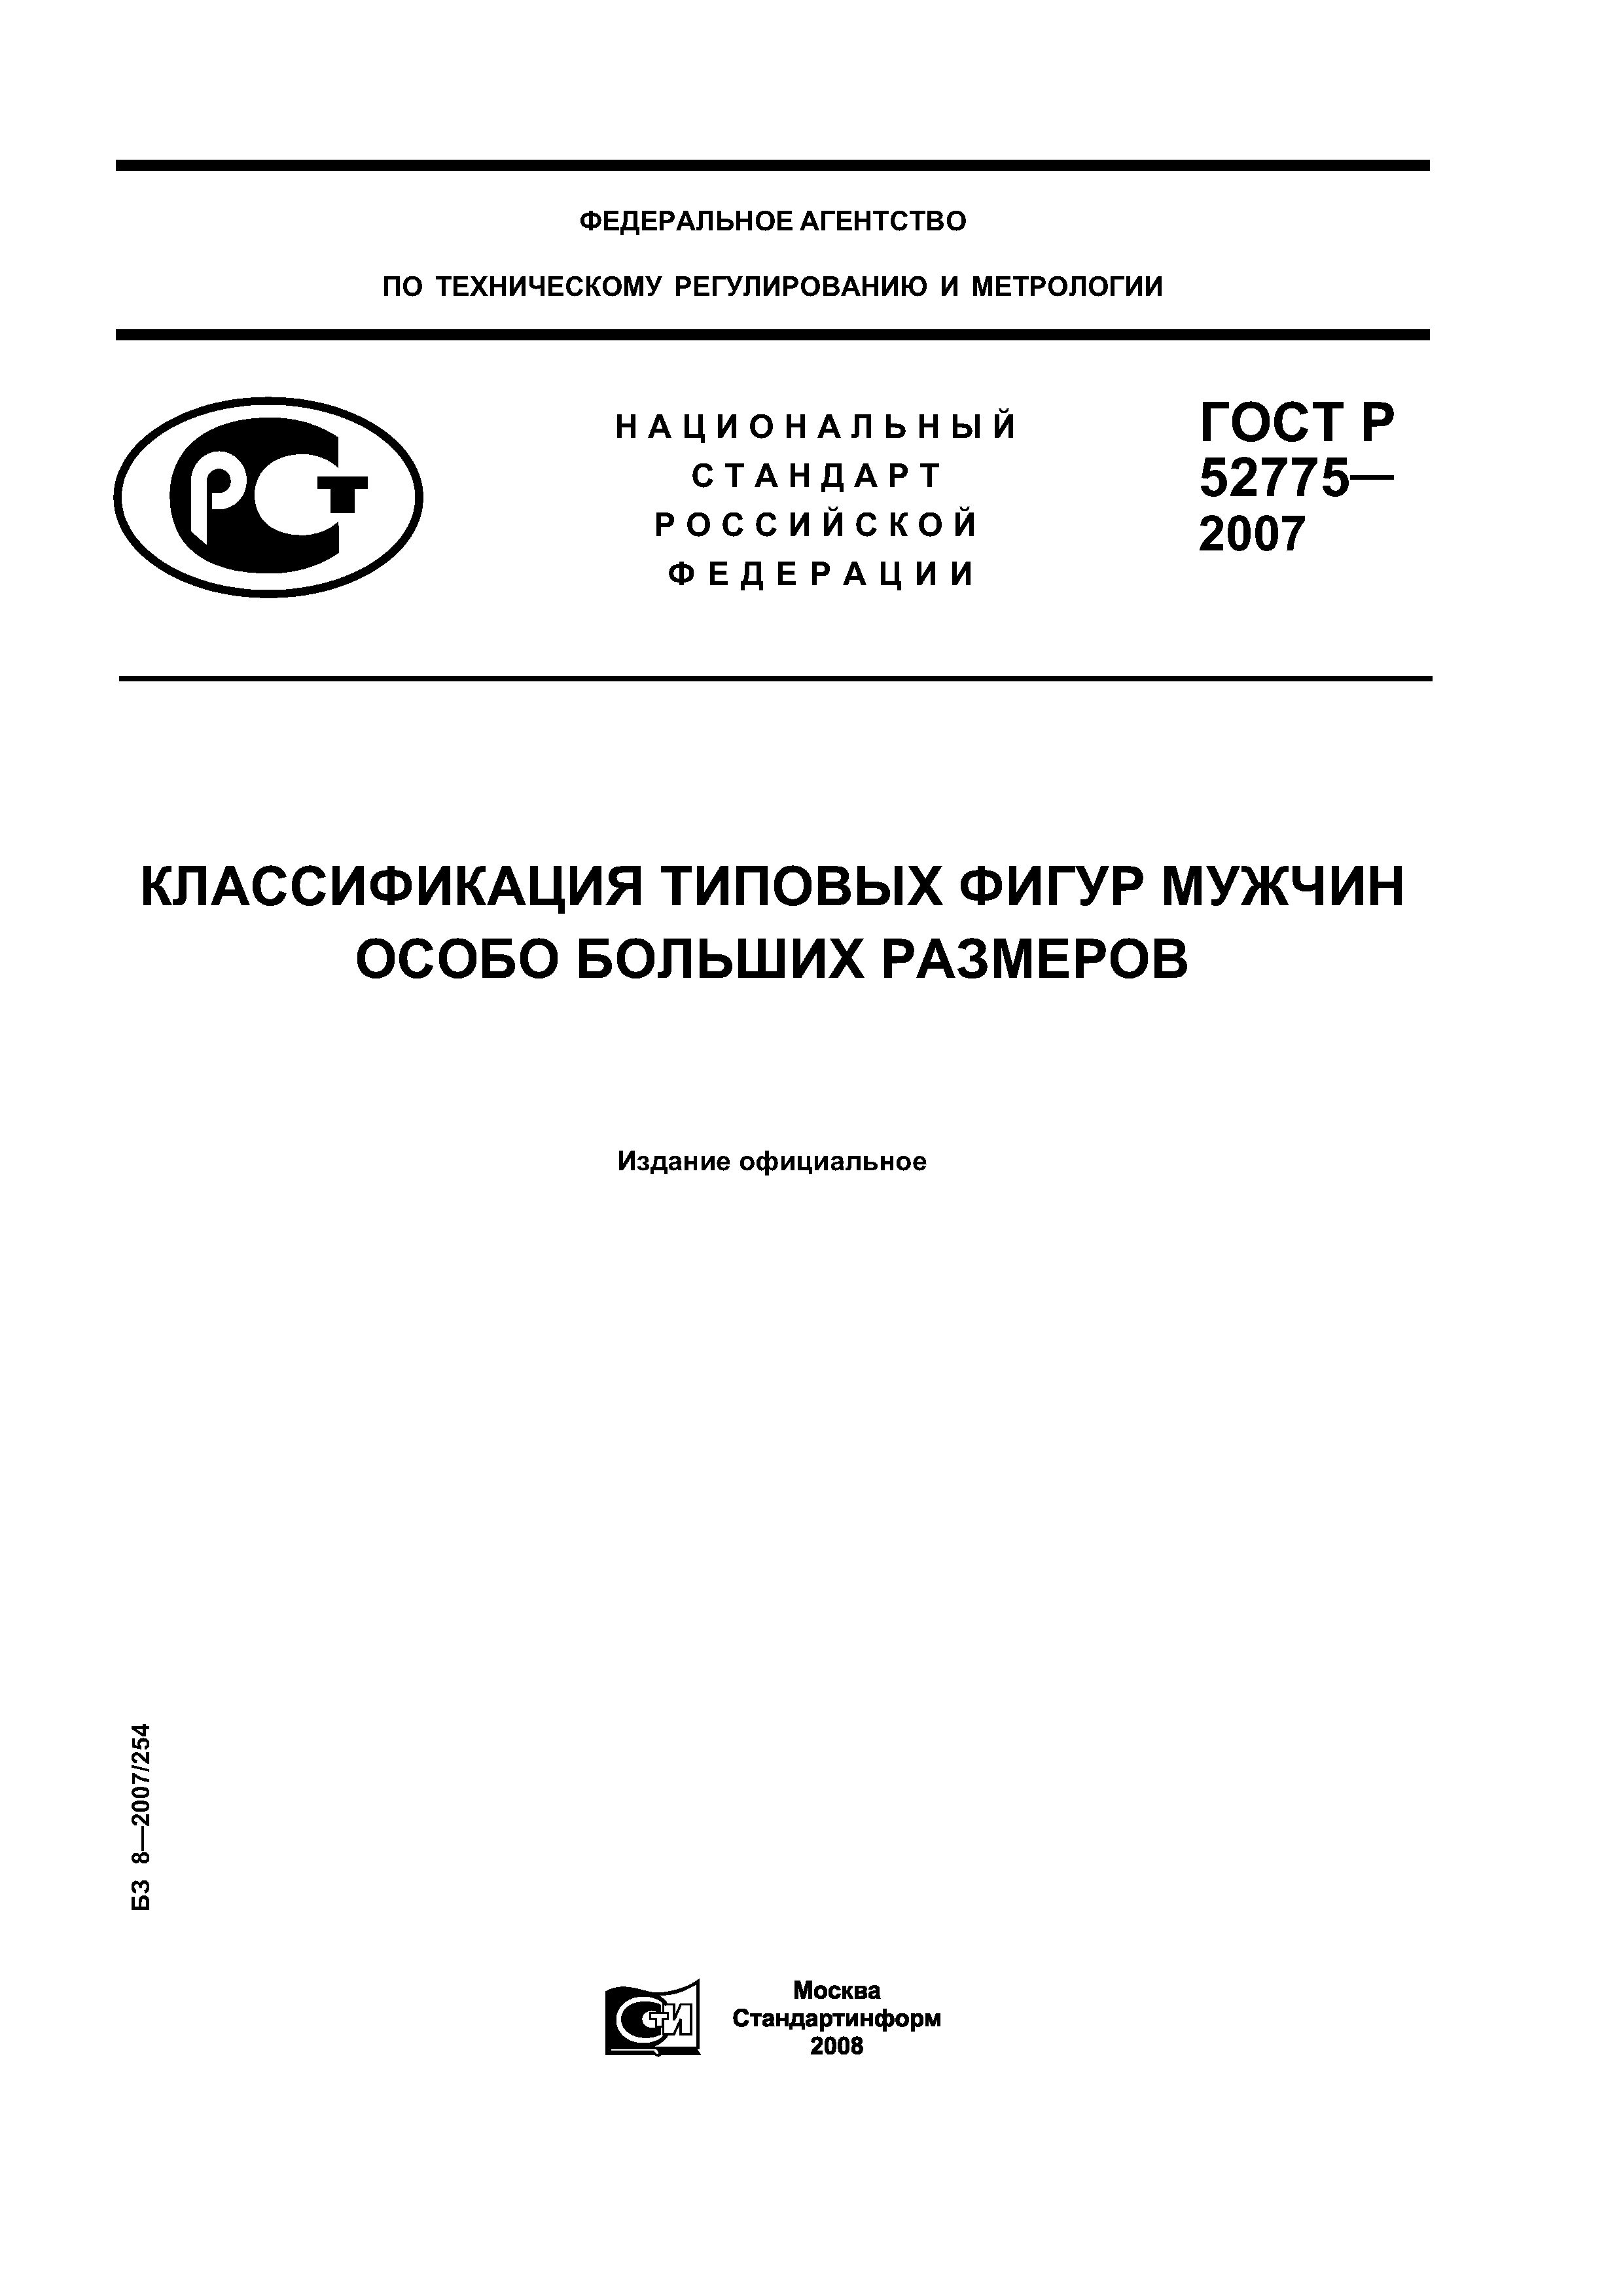 ГОСТ Р 52775-2007